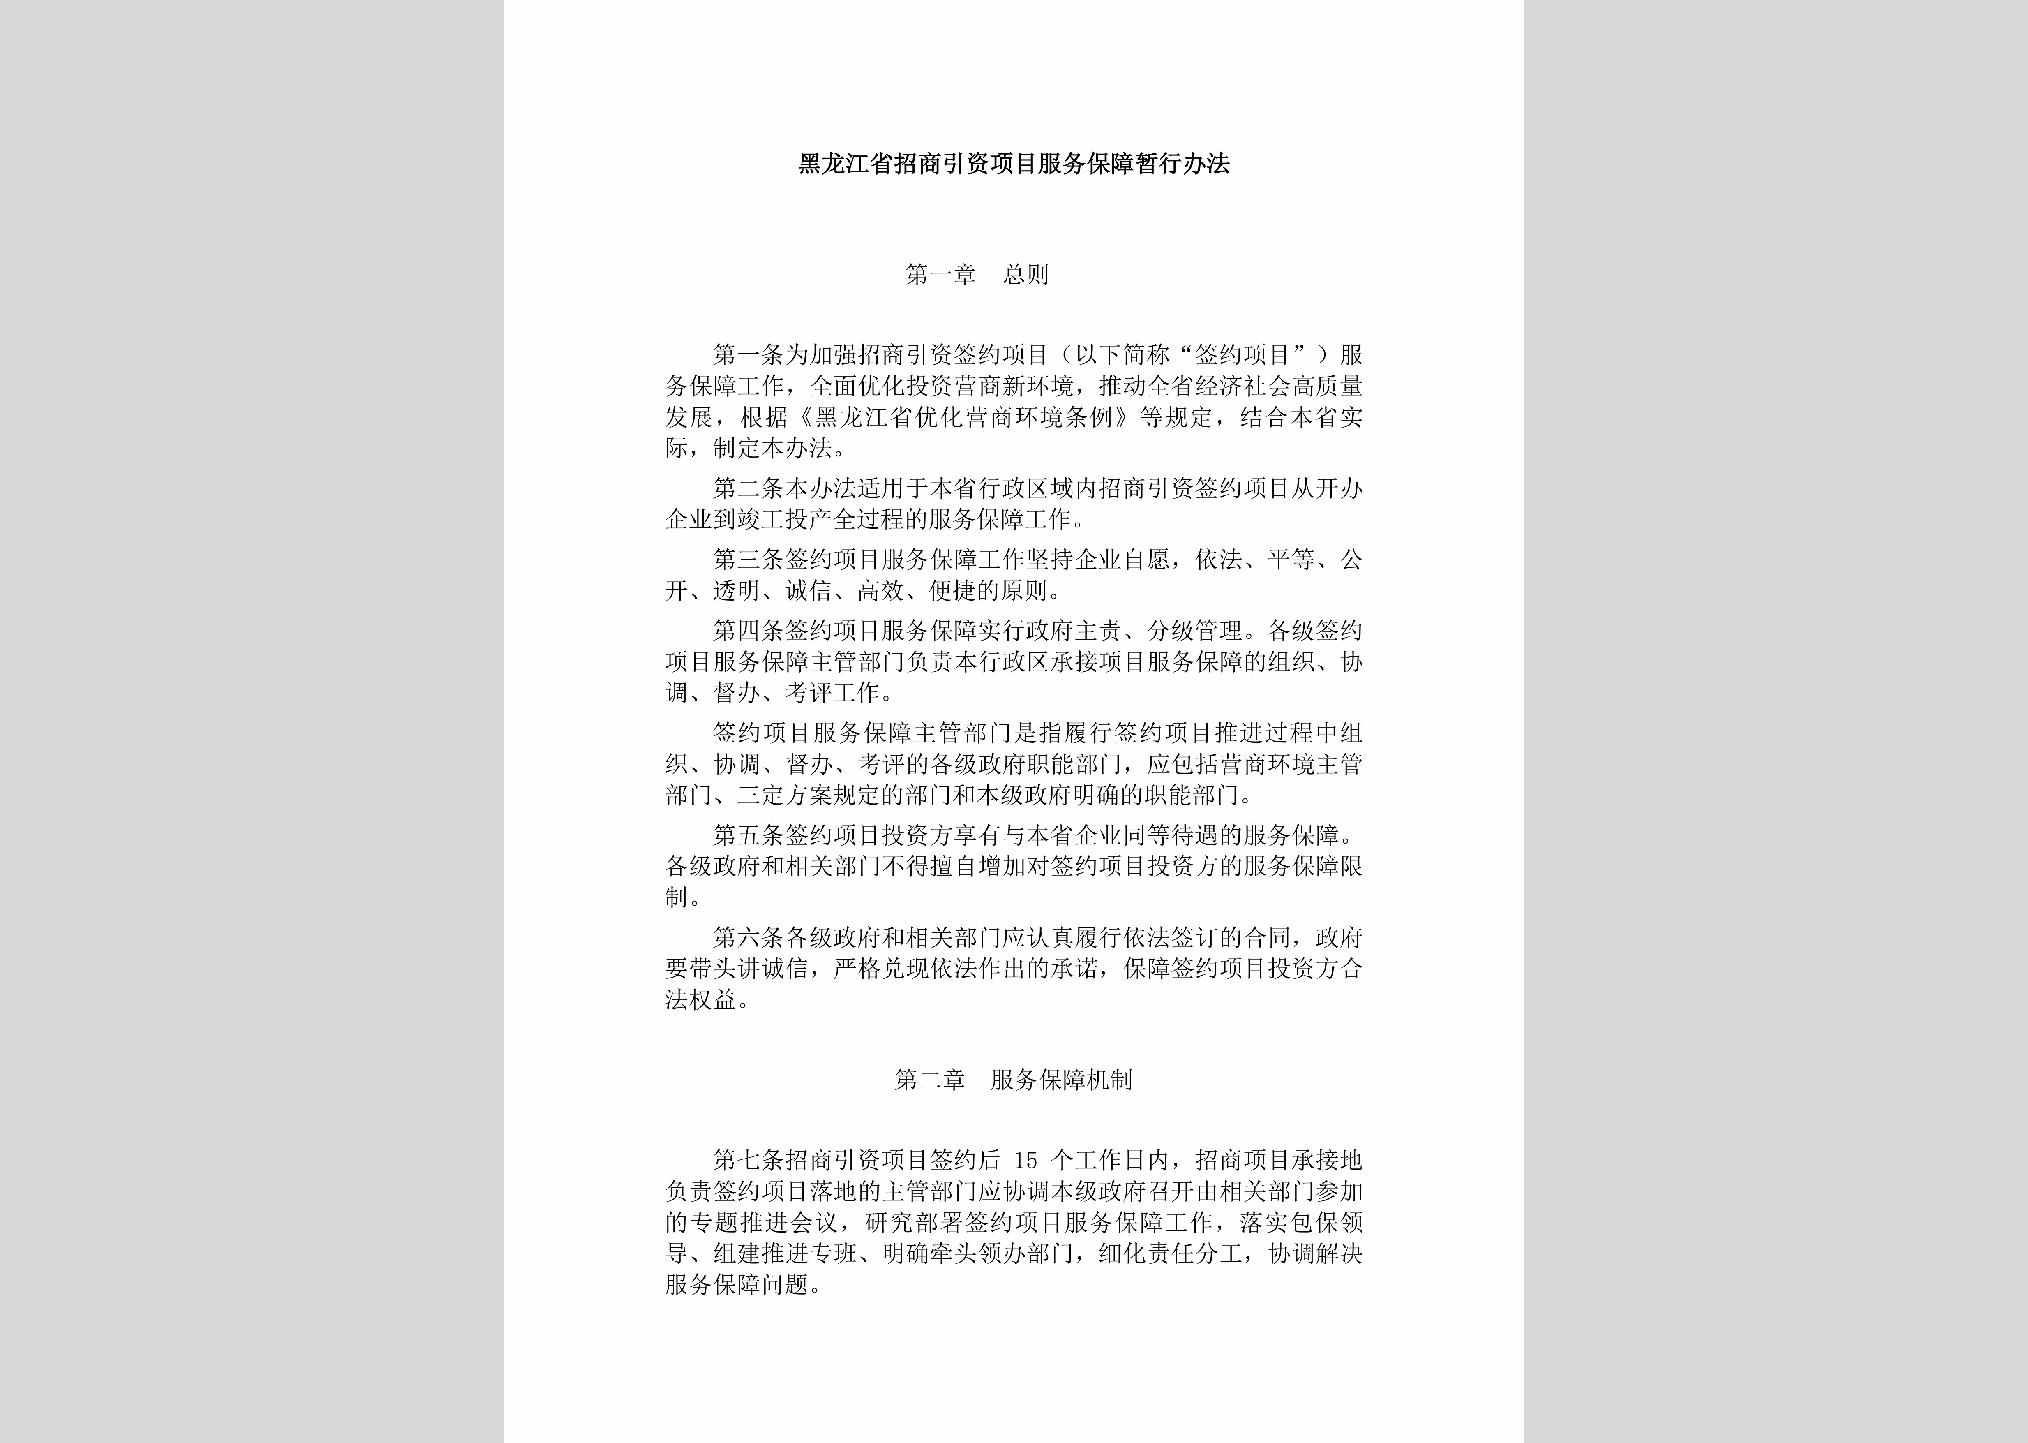 HLJ-ZSYZXMFW-2019：黑龙江省招商引资项目服务保障暂行办法